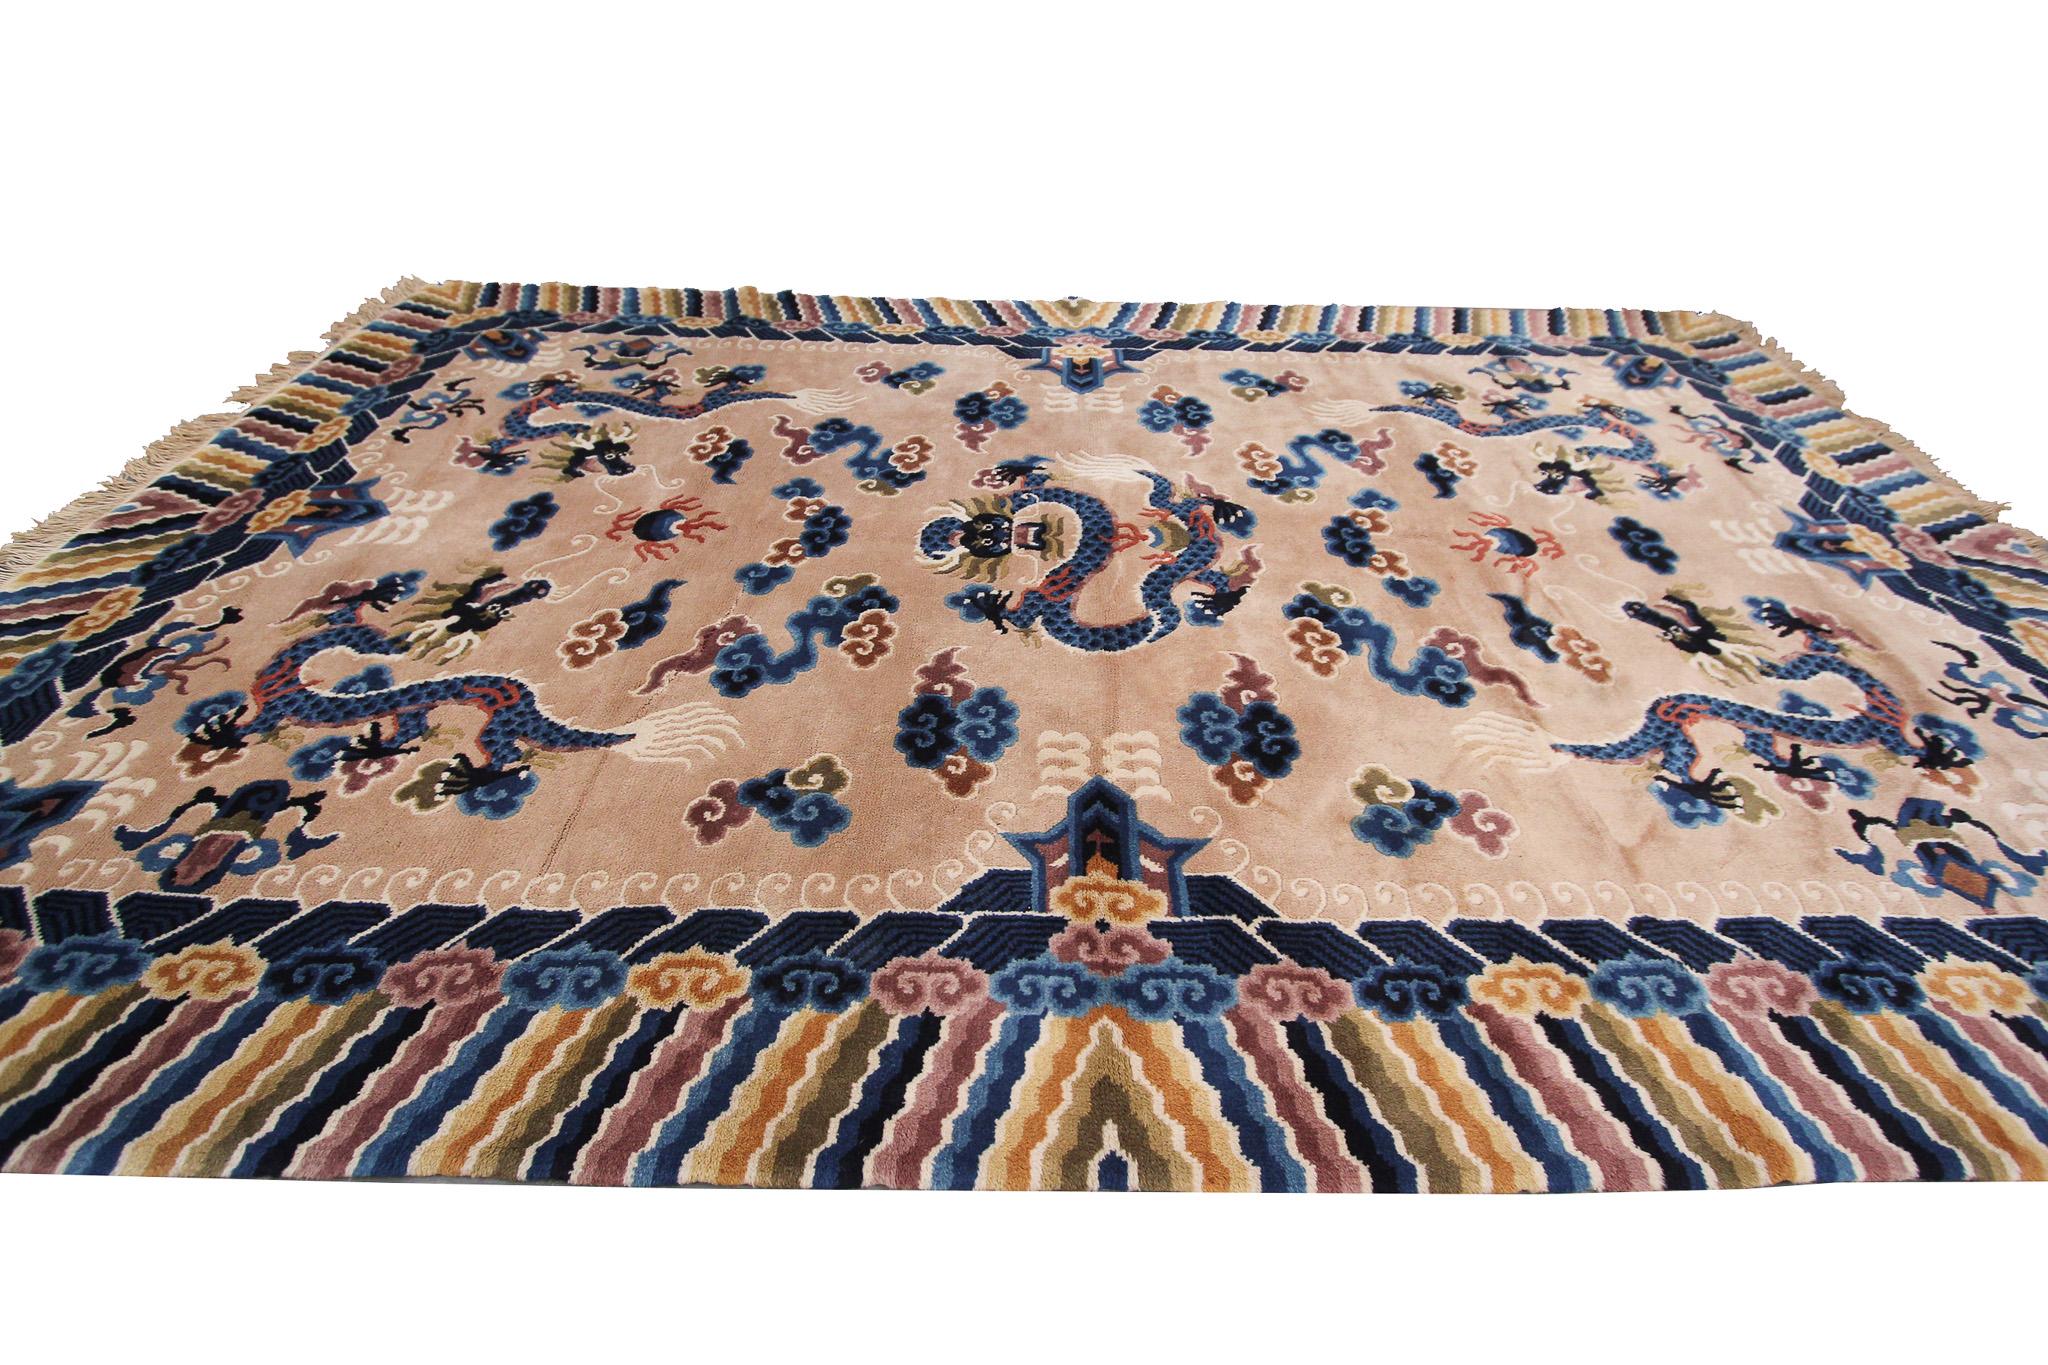 Vintage Art Deco rug Dragon rug Chinese peking rug beige 5x8 

153cm x 244cm

130cmx191cm

